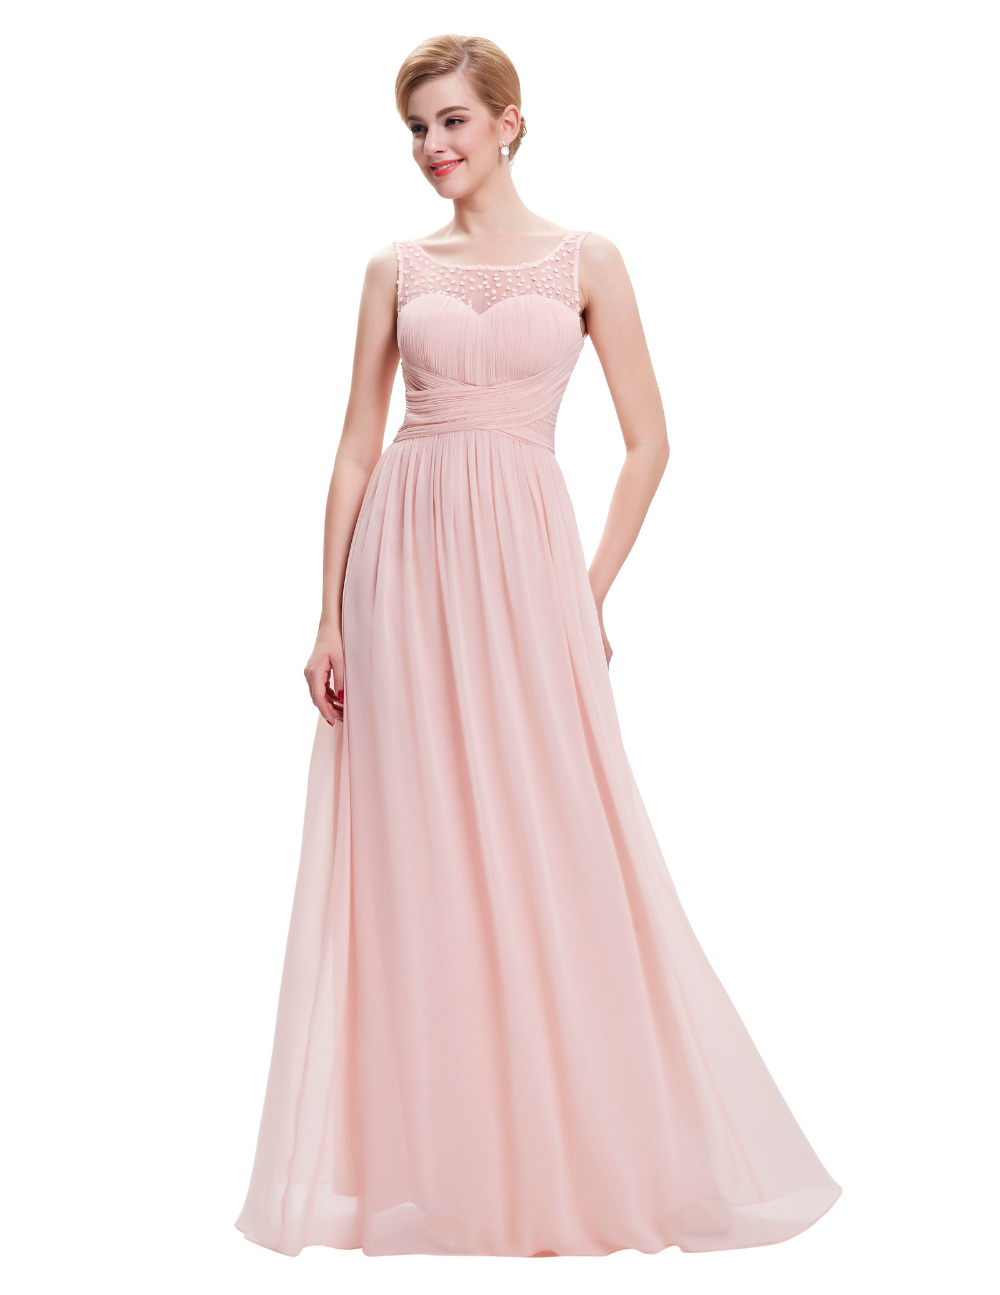 Cheaplong pale pink bridesmaid dresses Budget